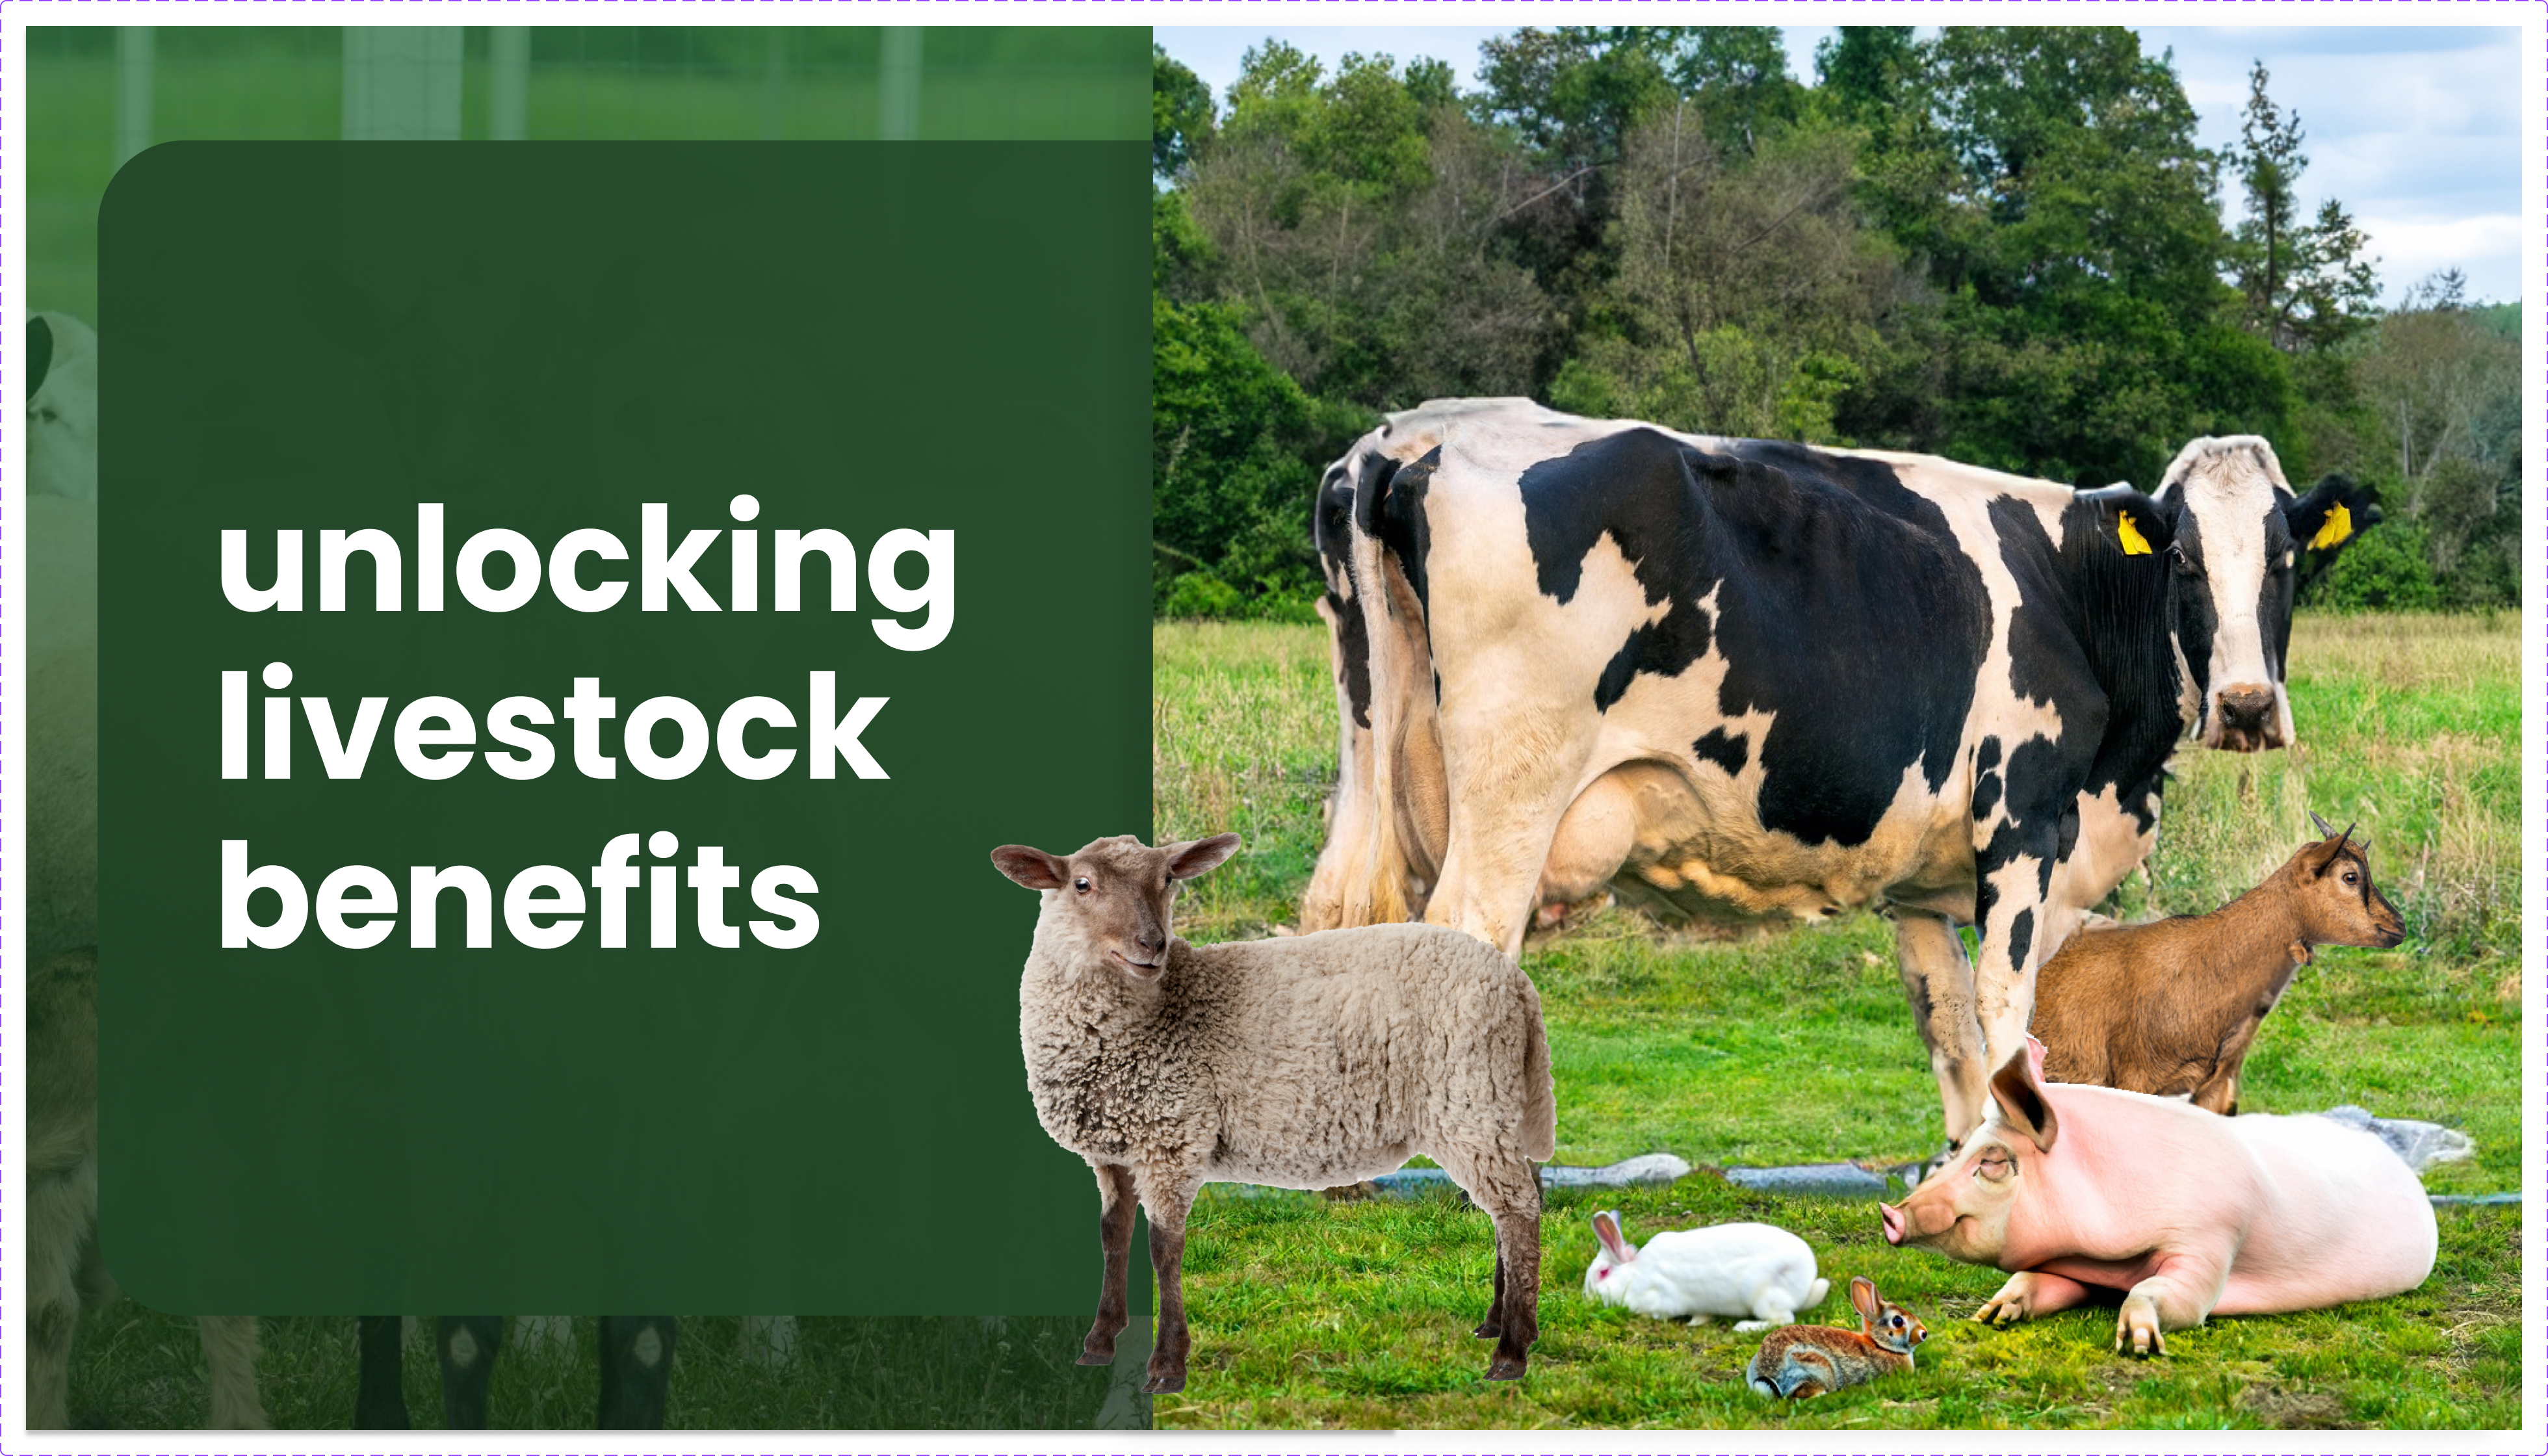 Course Trailer: Livestock Insurance Scheme: Unlocking Insurance Benefits. Watch to know more.